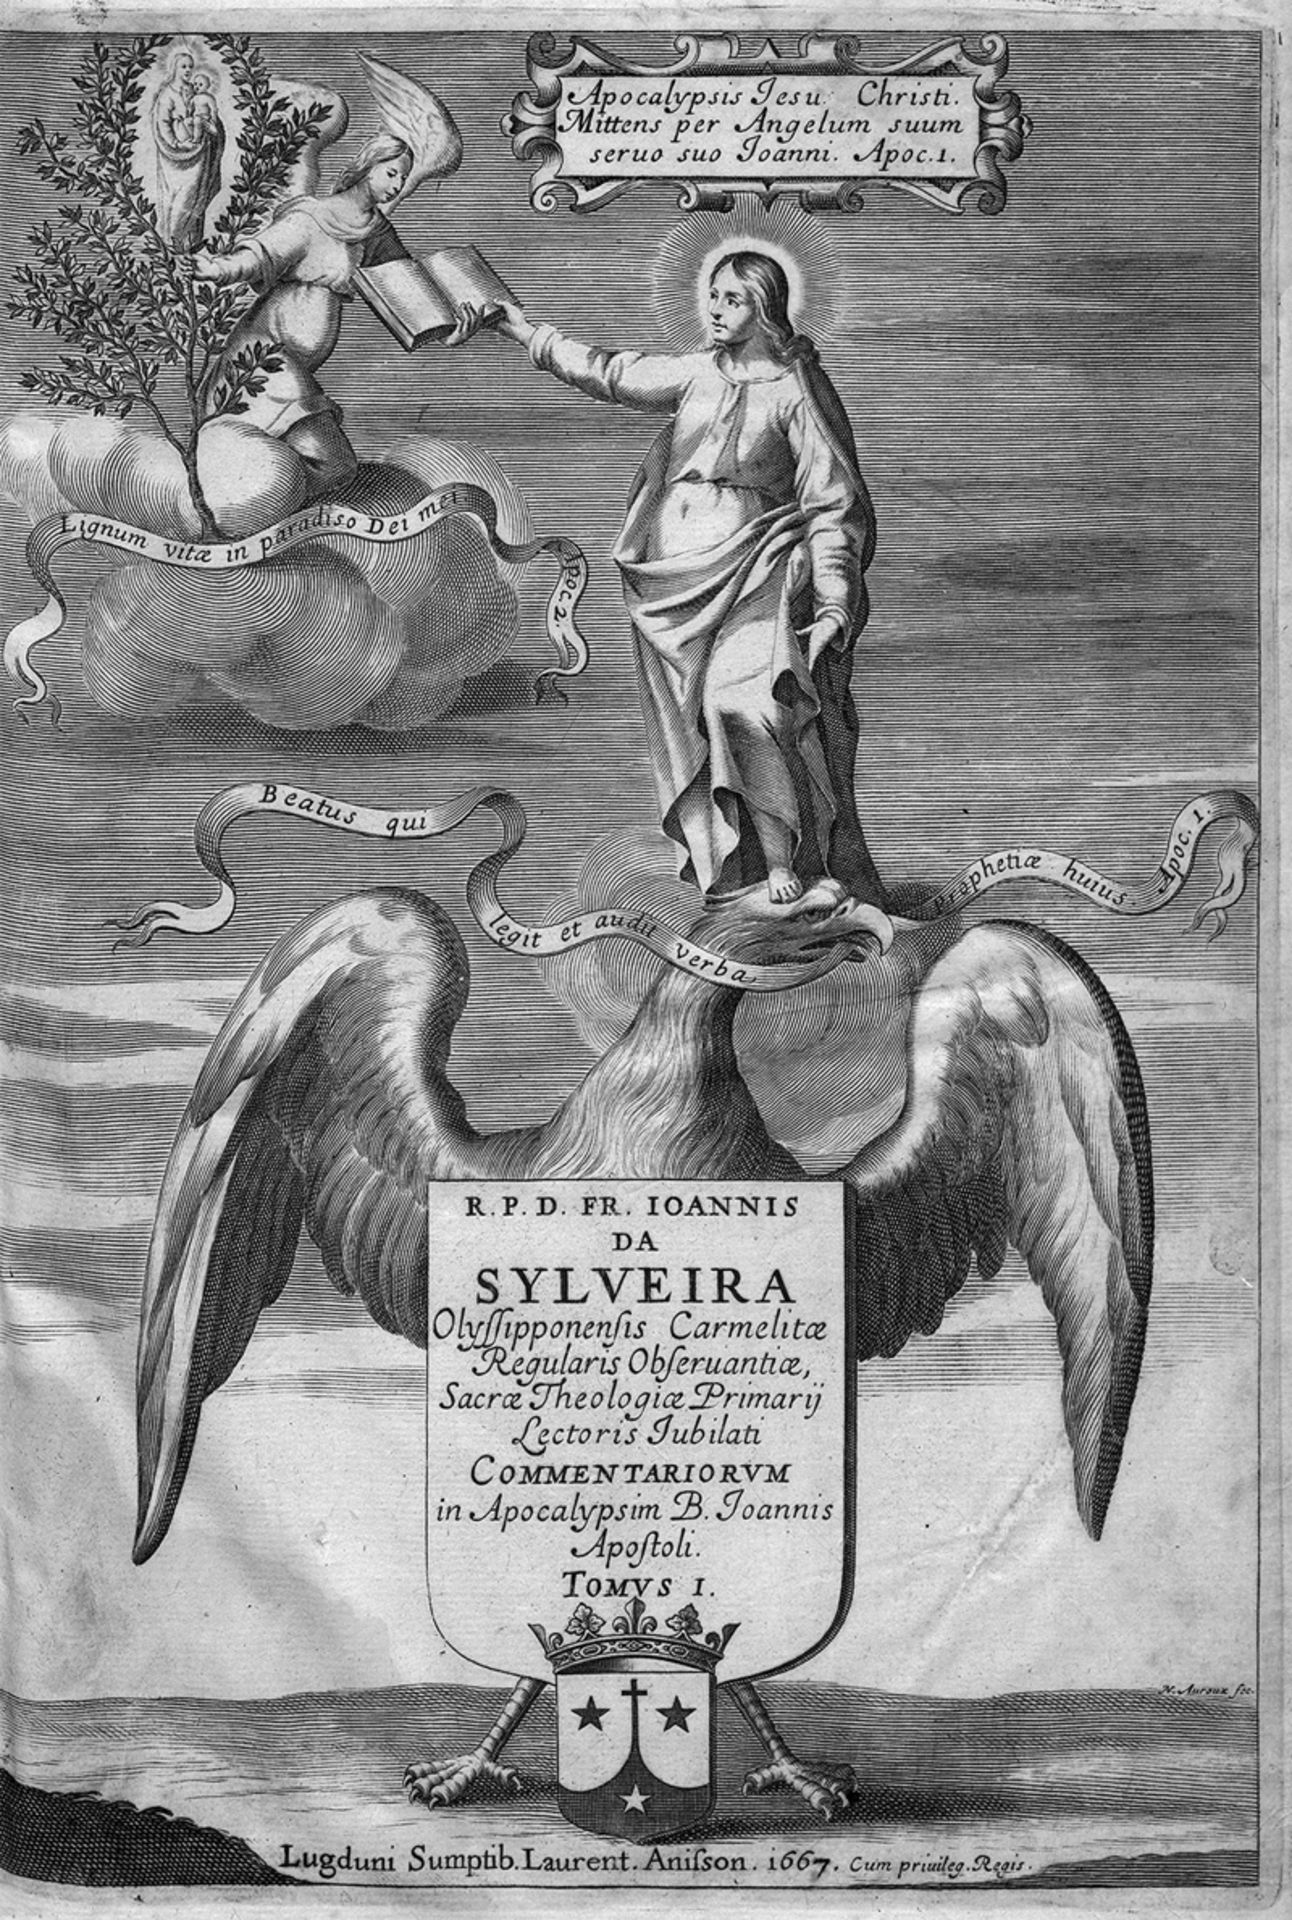 Sylveira, João da: Commentariorum in apocalypsim b. Joannis apostoli